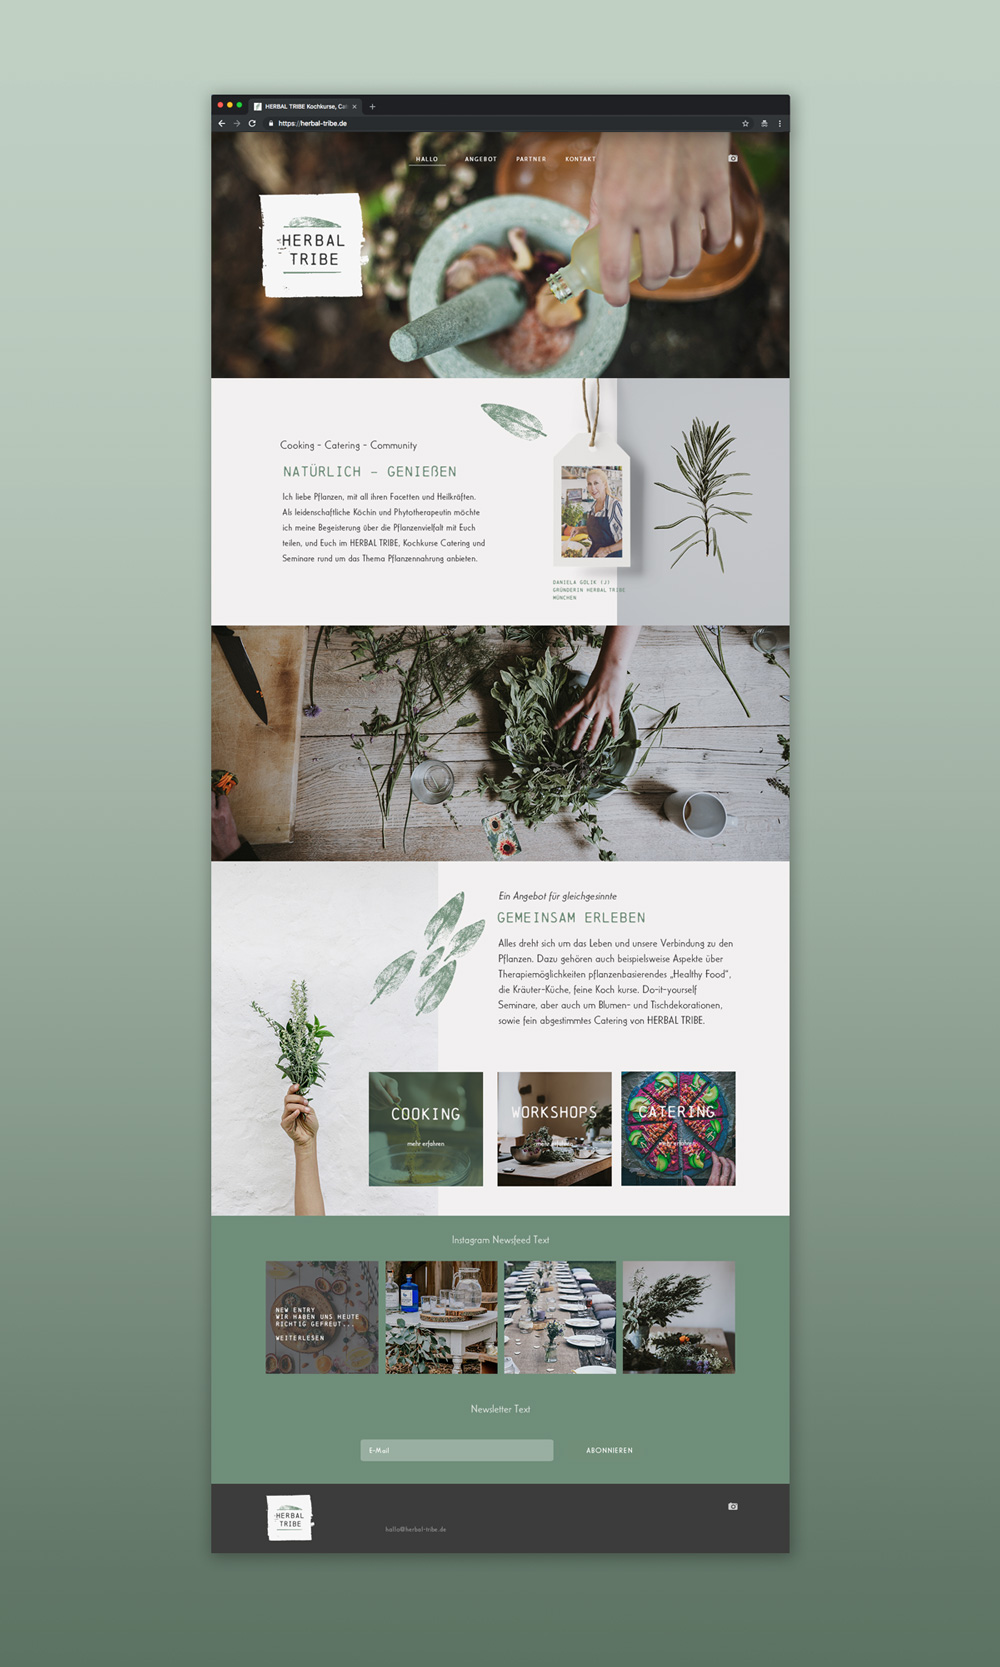 Michael-seidl-webdesign-herbal-tribe.jpg